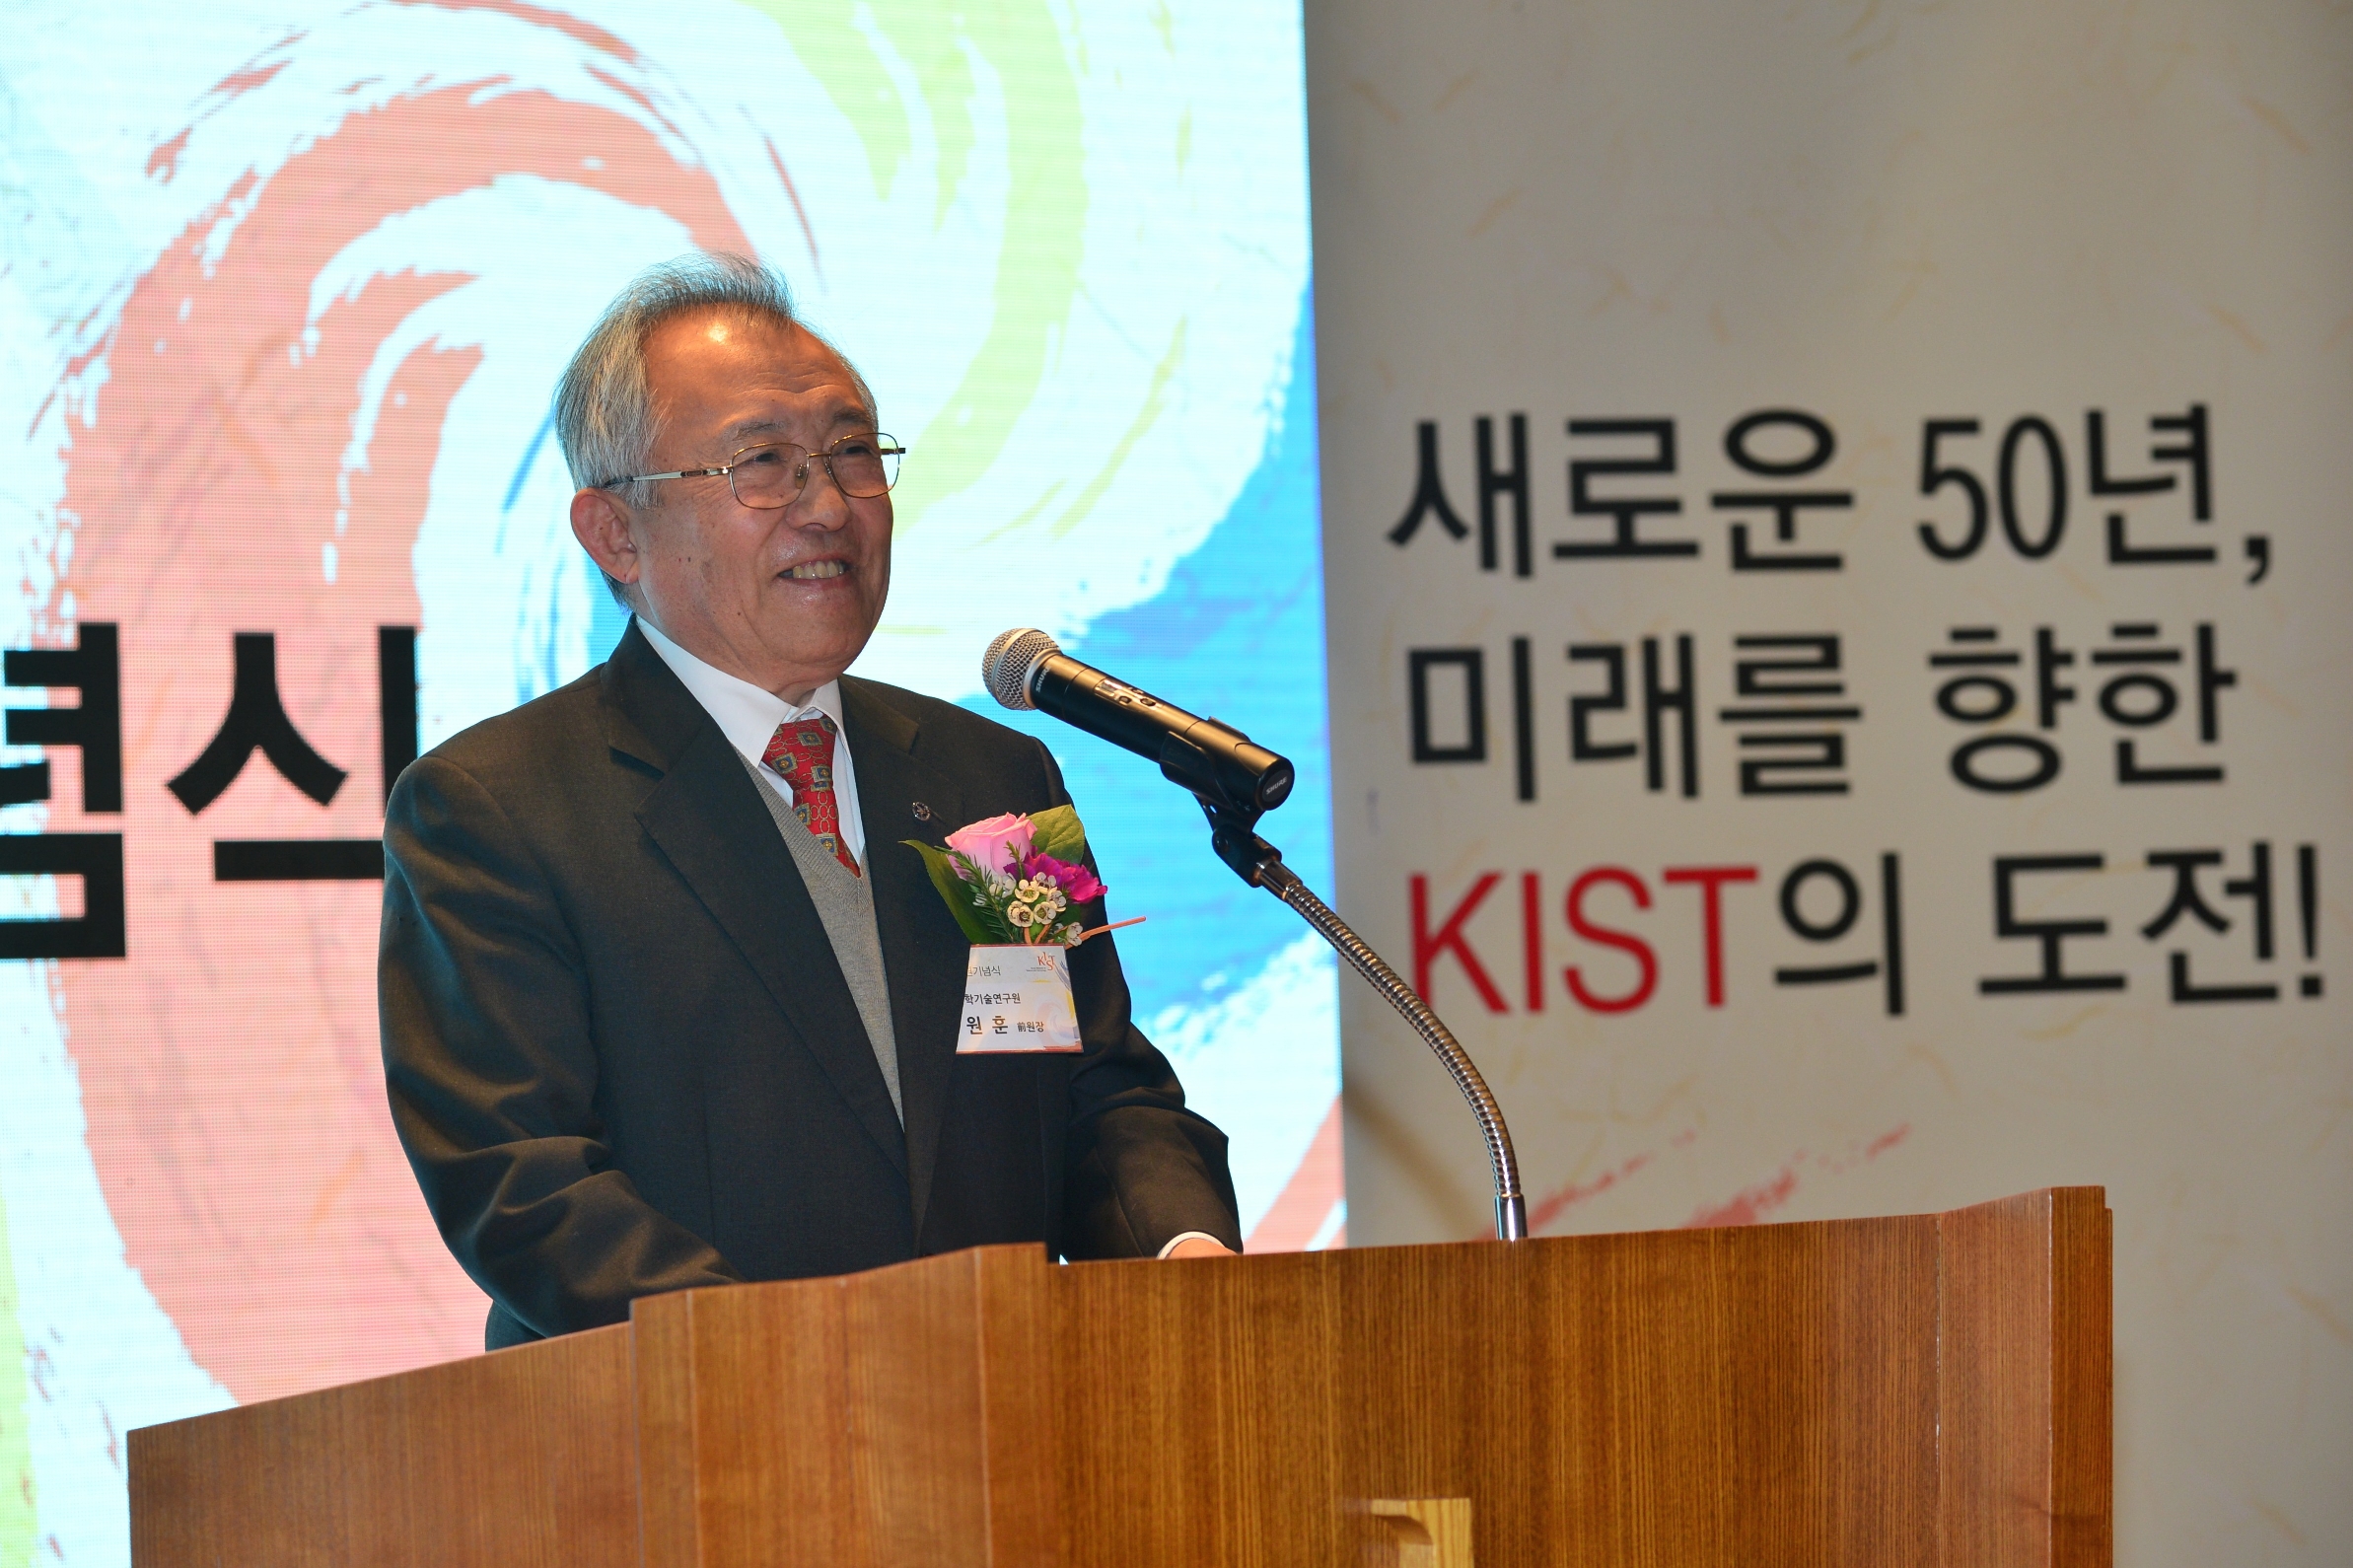 KIST 개원 49주년 기념식-박원훈 회장님 축사 (2015.2.10)